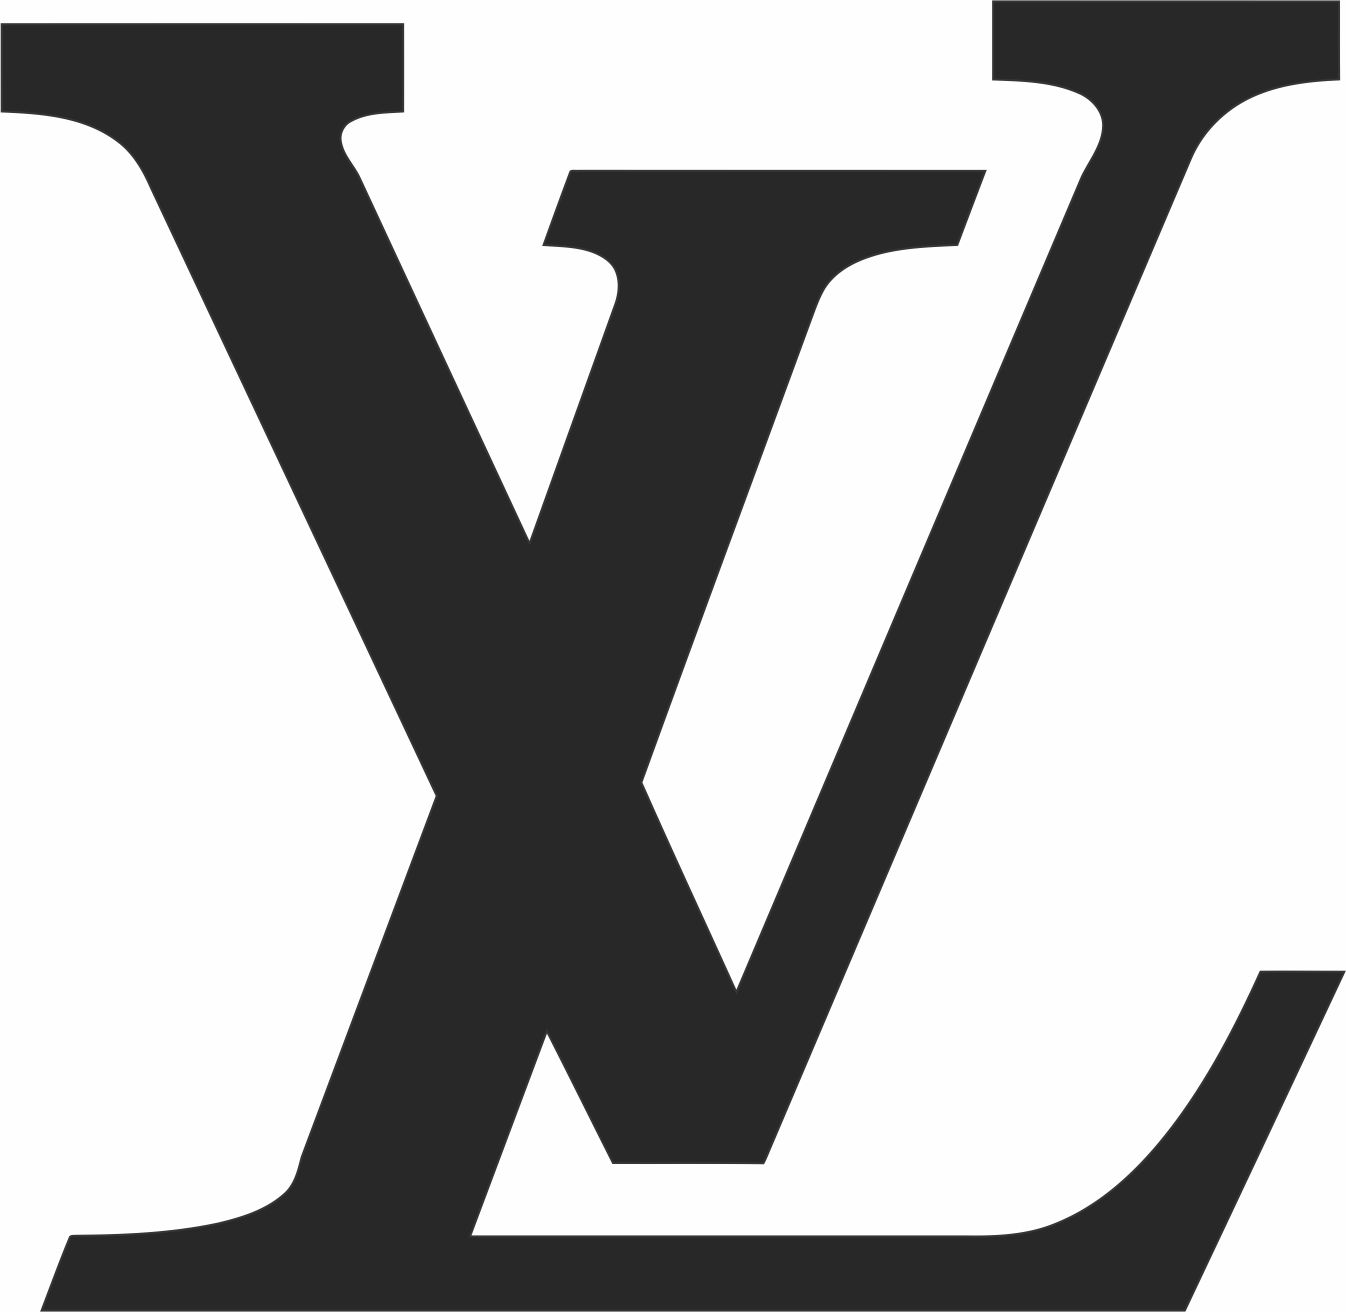 Louis Vuitton logo pattern SVG Free Cricut Design